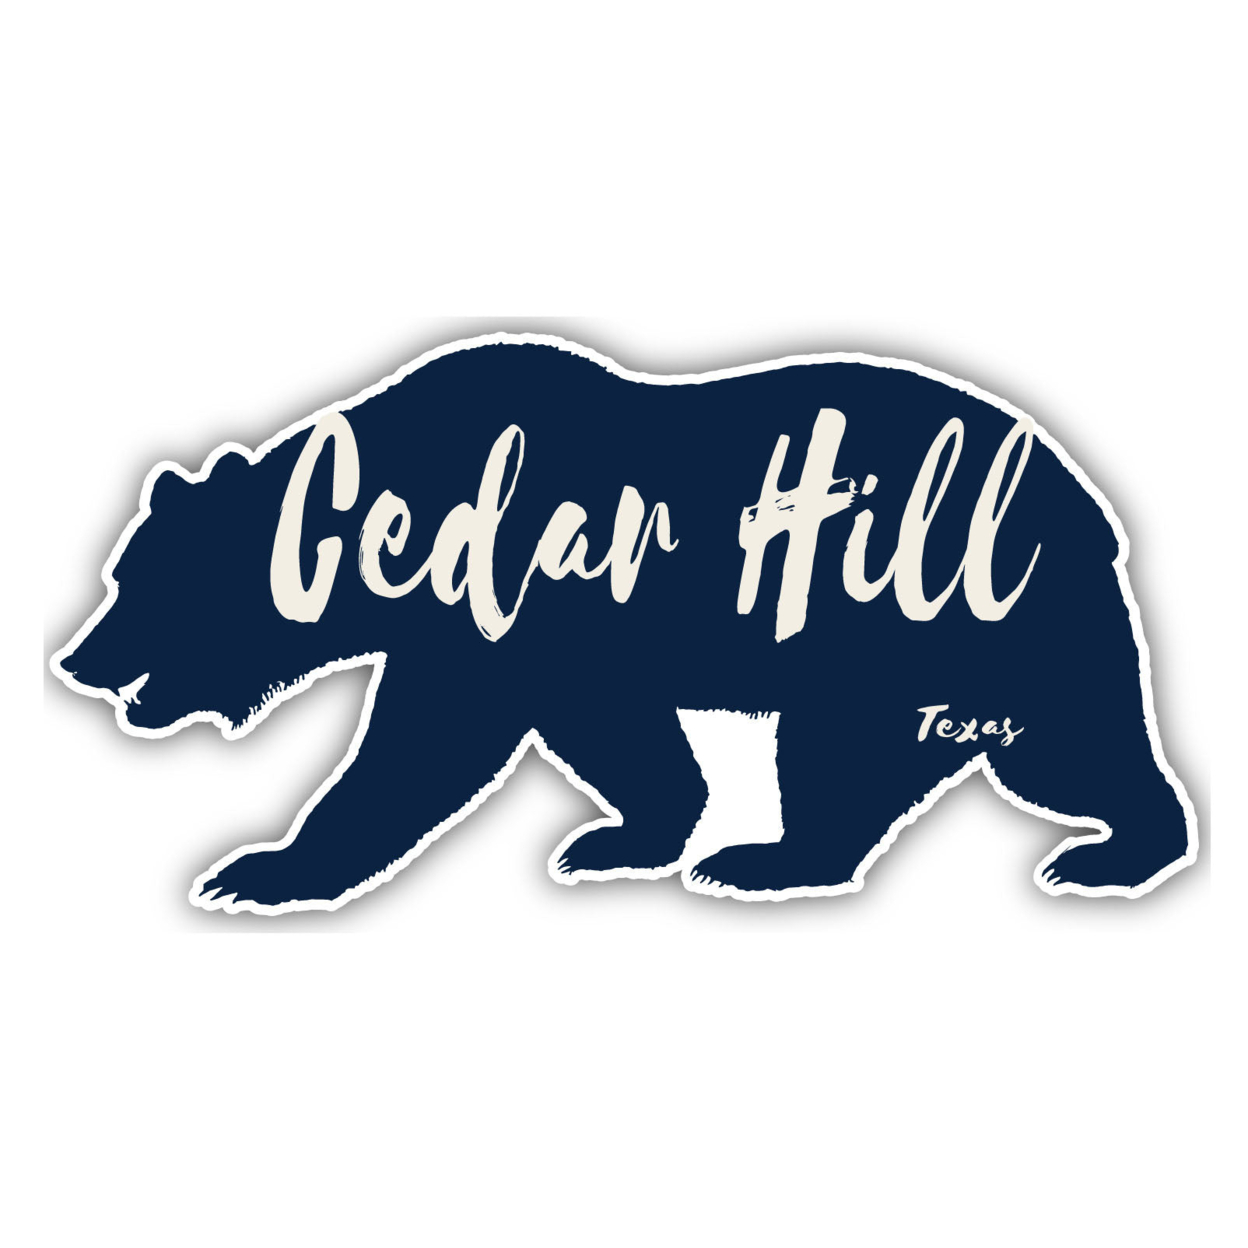 Cedar Hill Texas Souvenir Decorative Stickers (Choose Theme And Size) - 4-Pack, 10-Inch, Bear